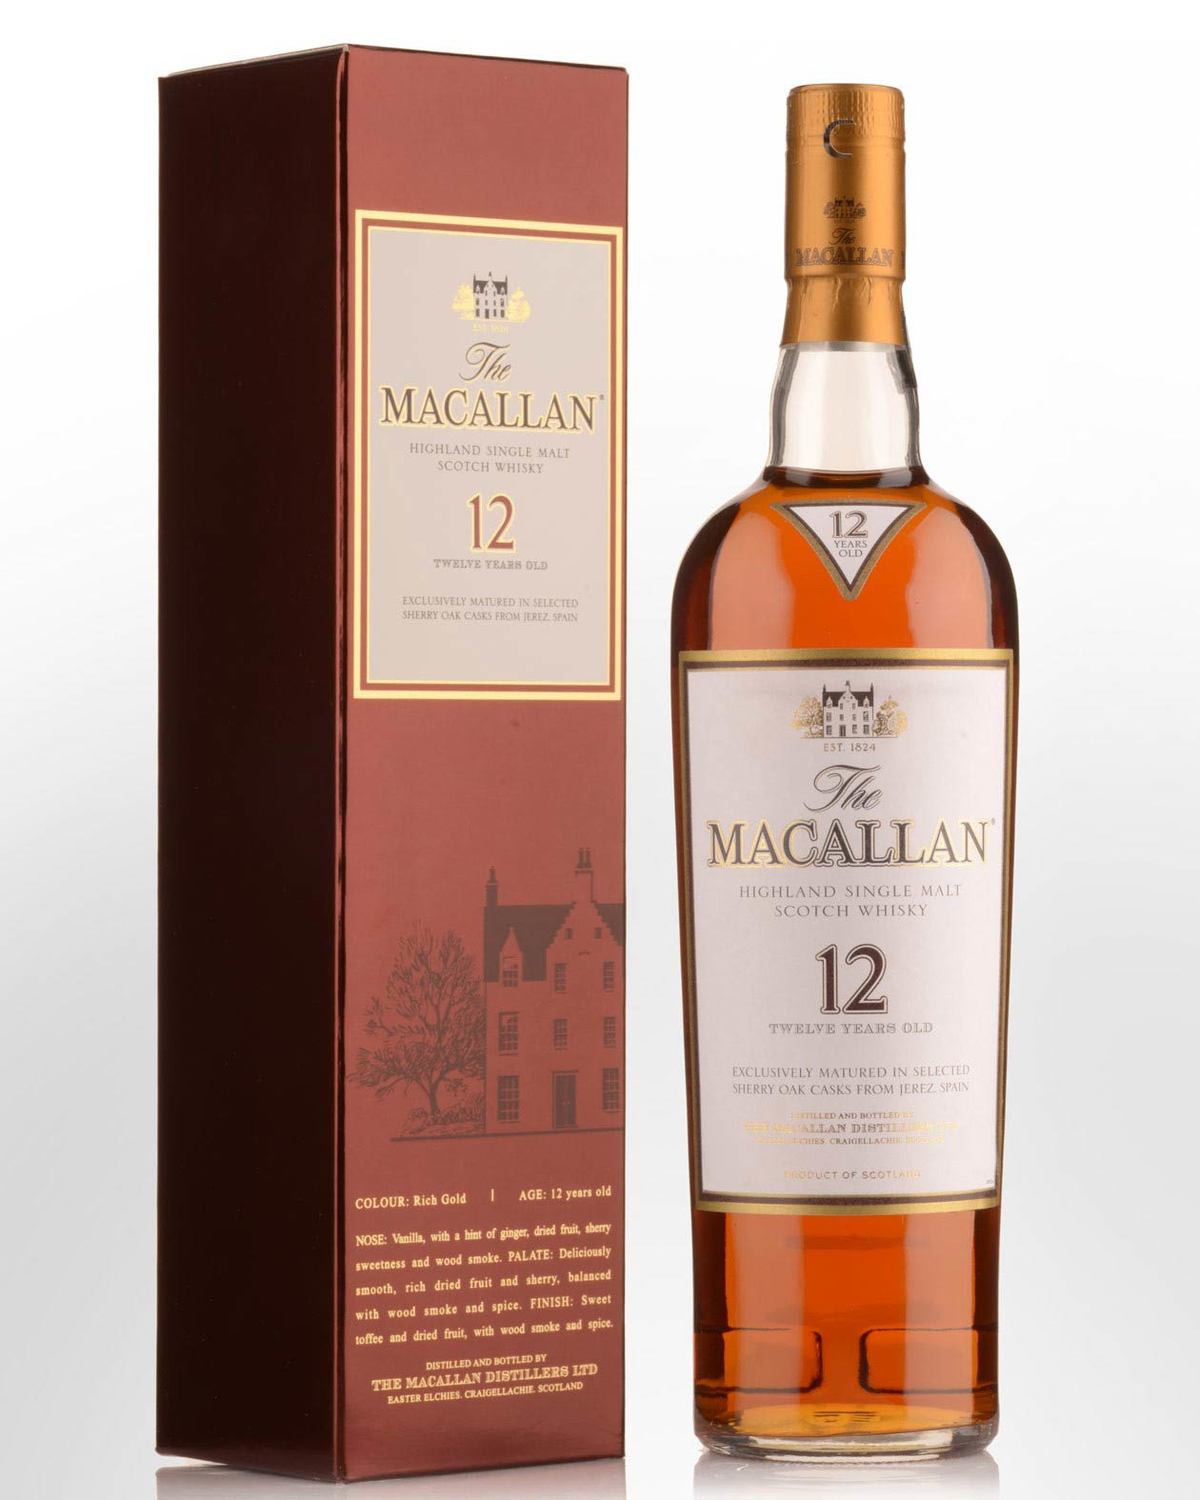 The Macallan Highland 12 Year Old Single Malt Scotch Whisky ABV